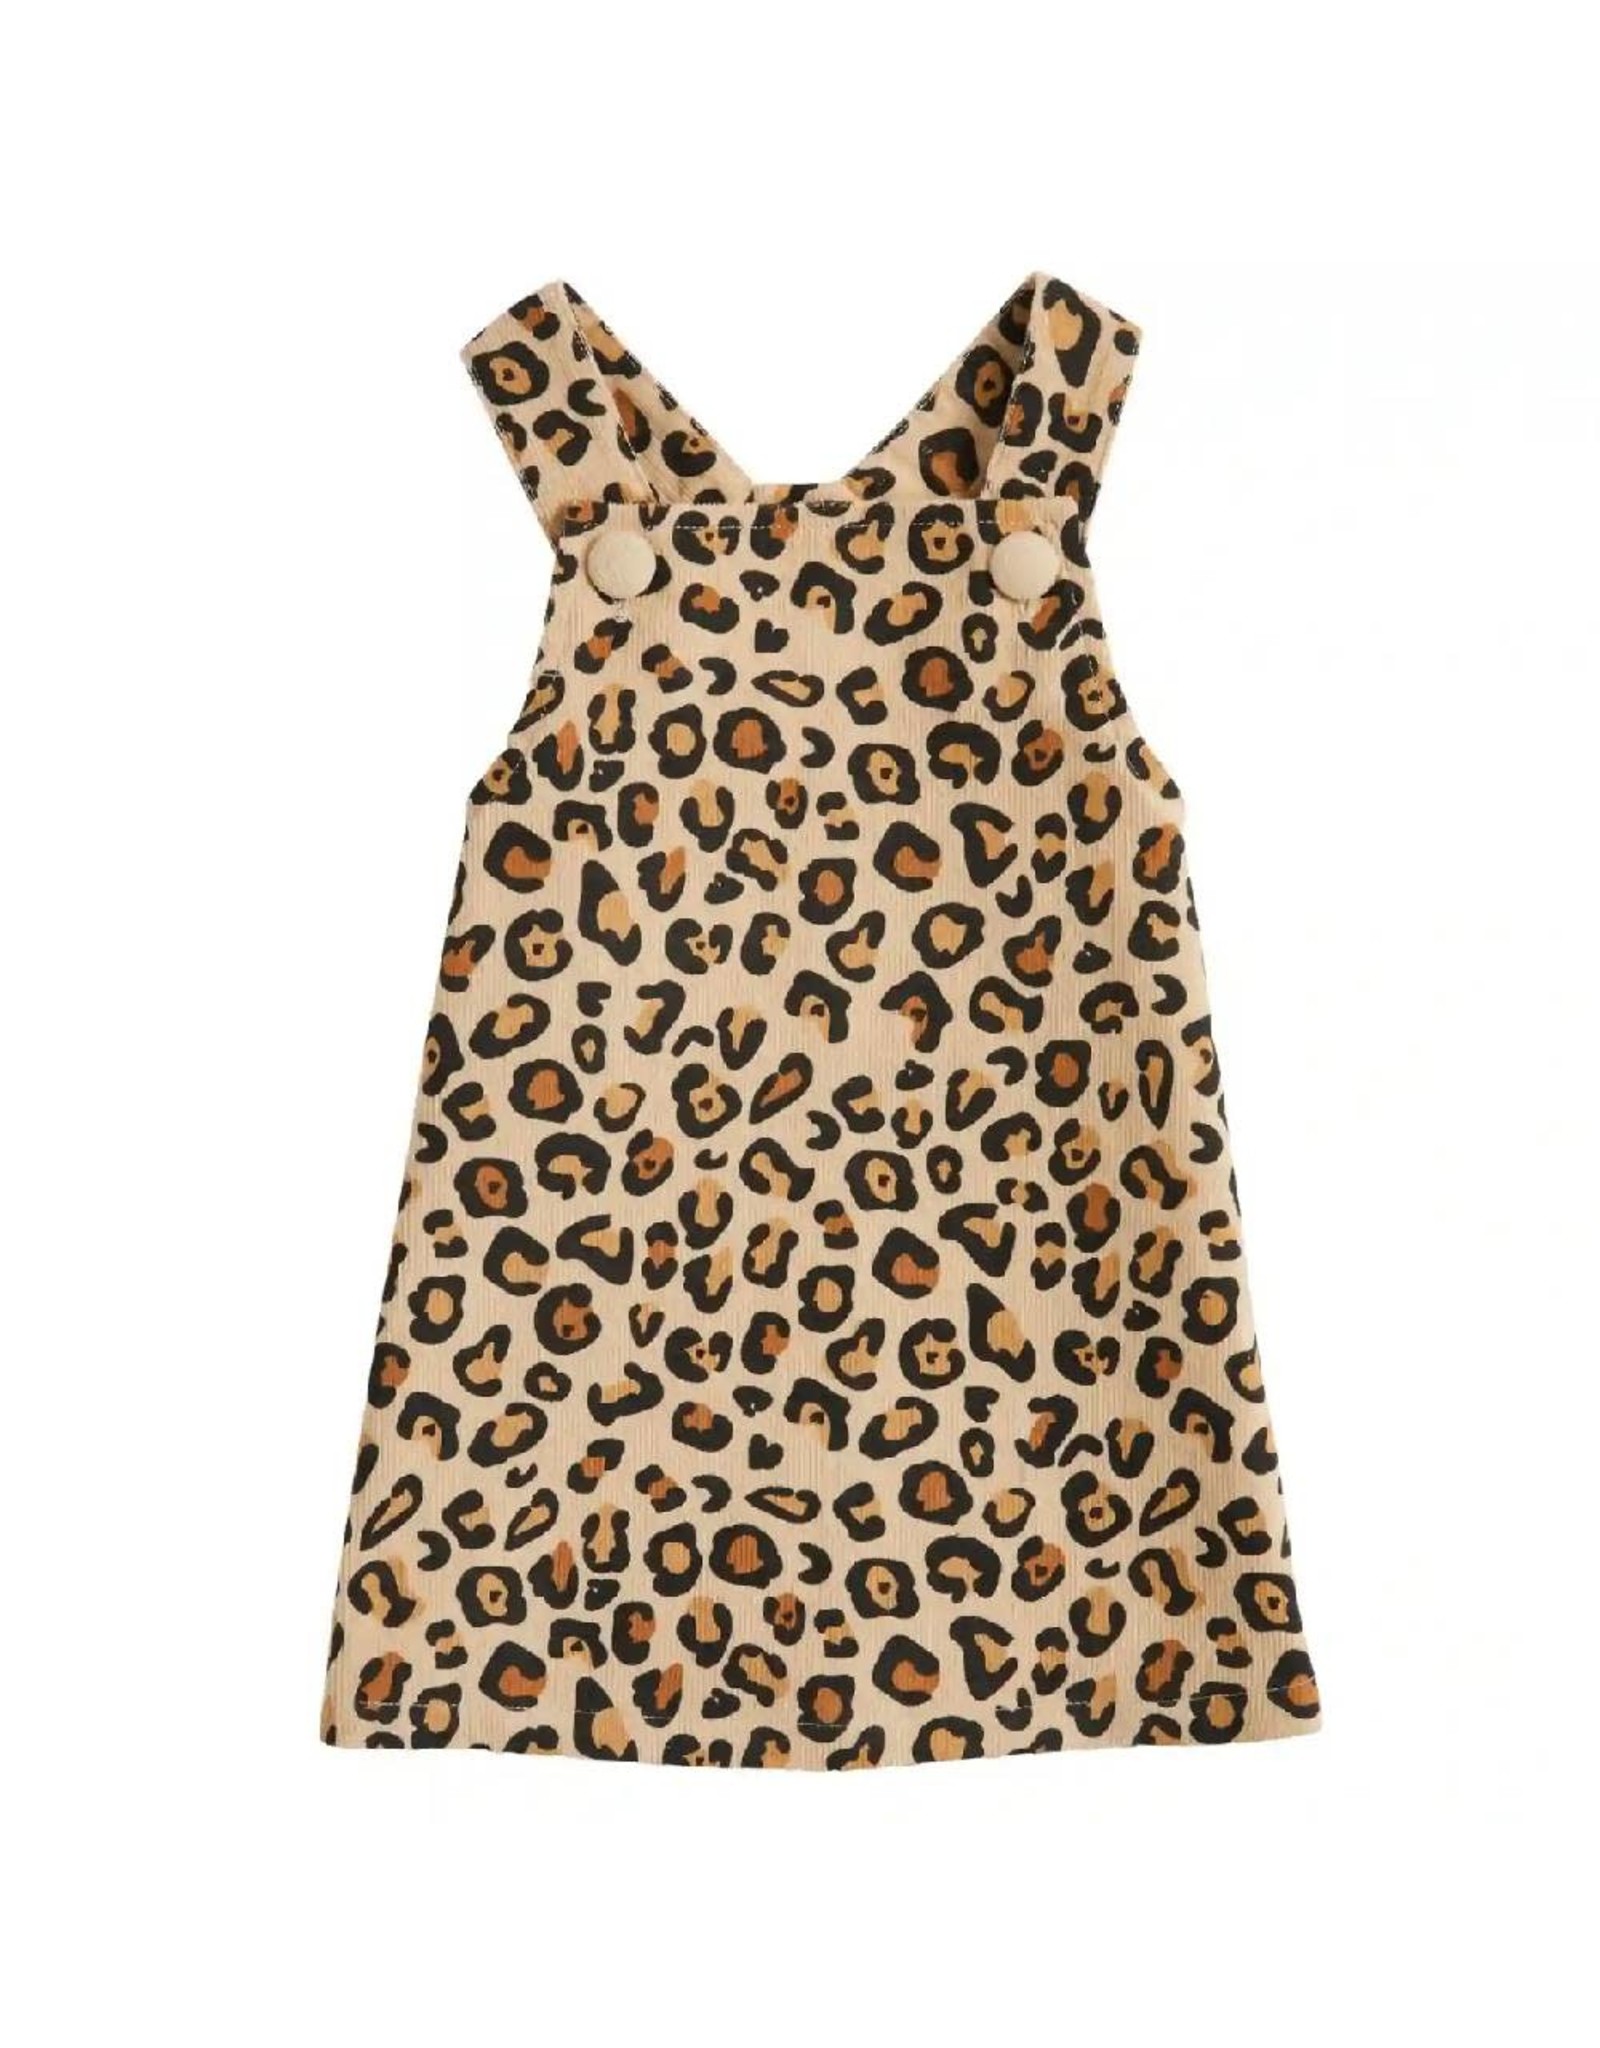 Mudpie Leopard Overall Dress